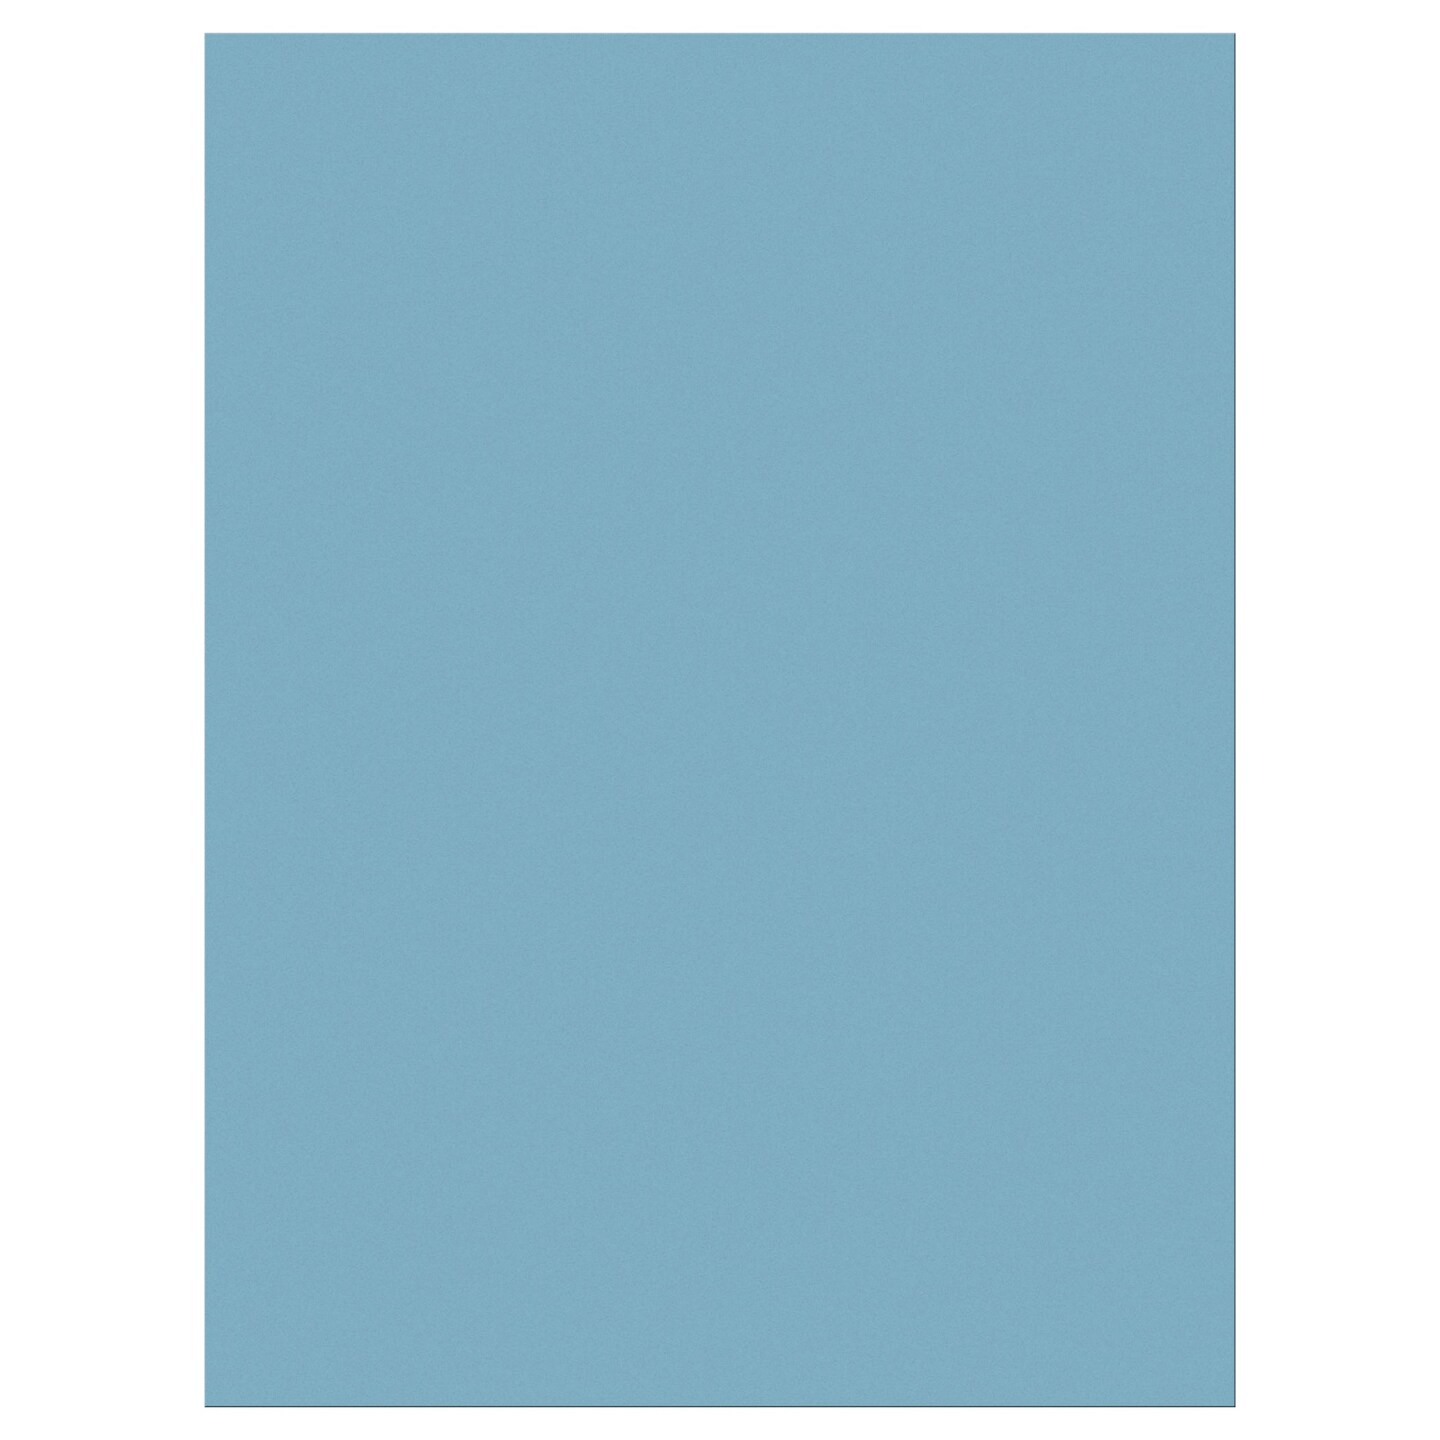 Construction Paper, Sky Blue, 9 x 12, 50 Sheets